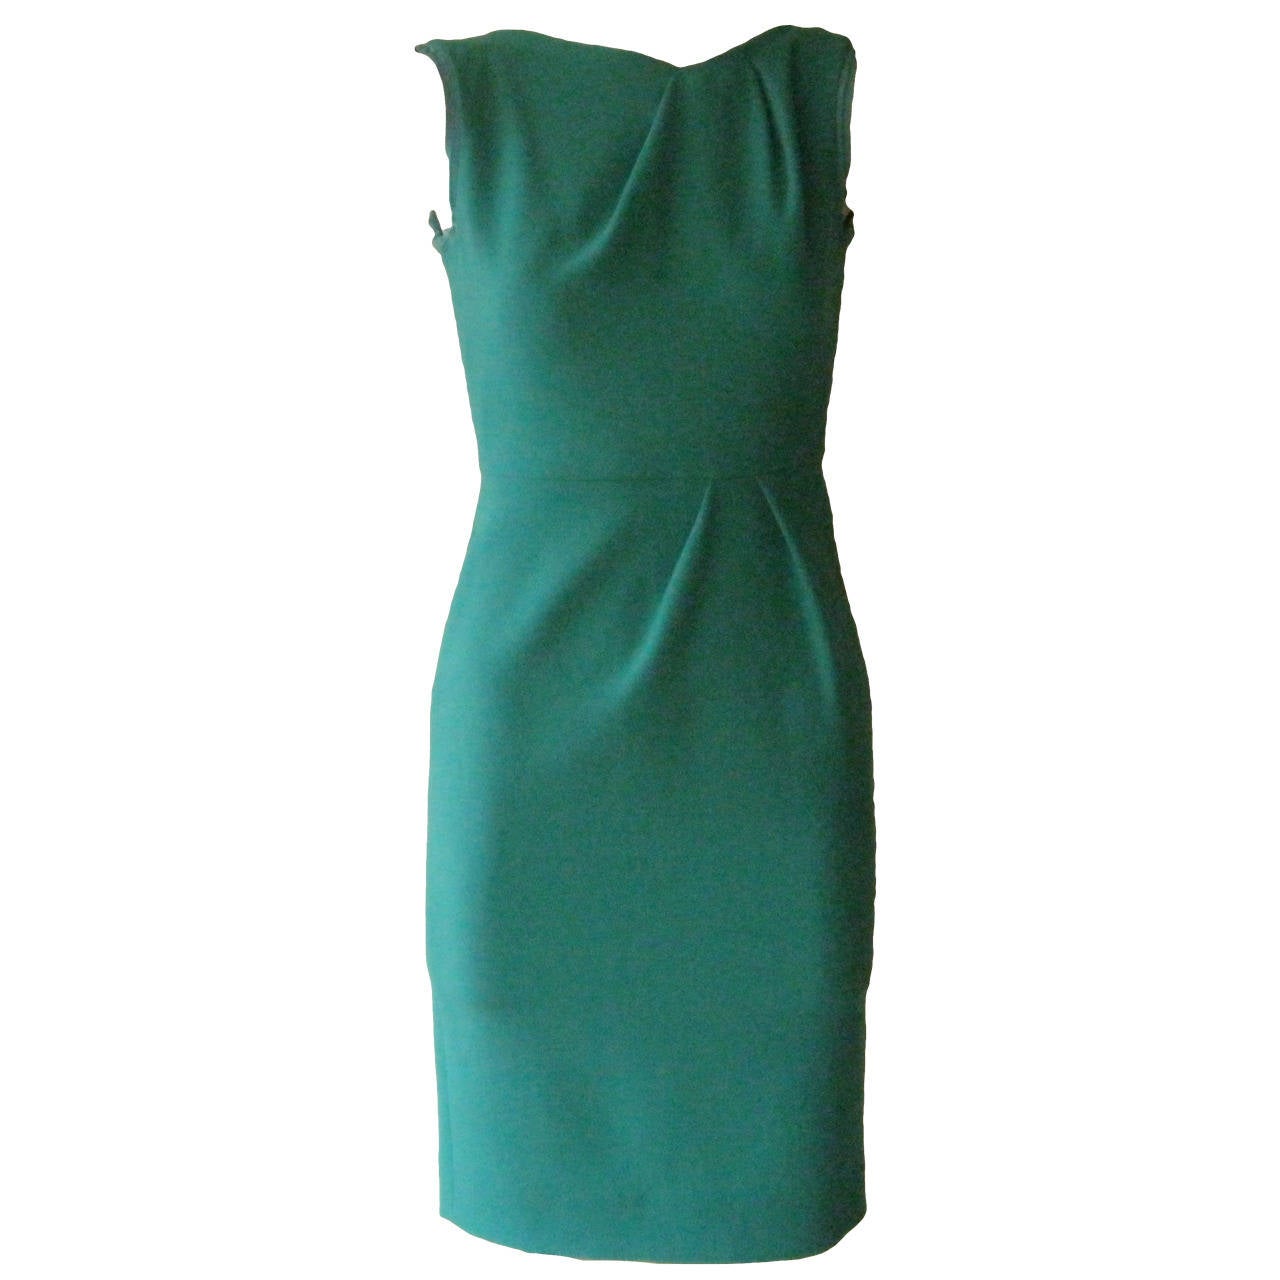 Stunning Roksanda Ilincic "Delphine" Wool-Crepe Dress 8 UK